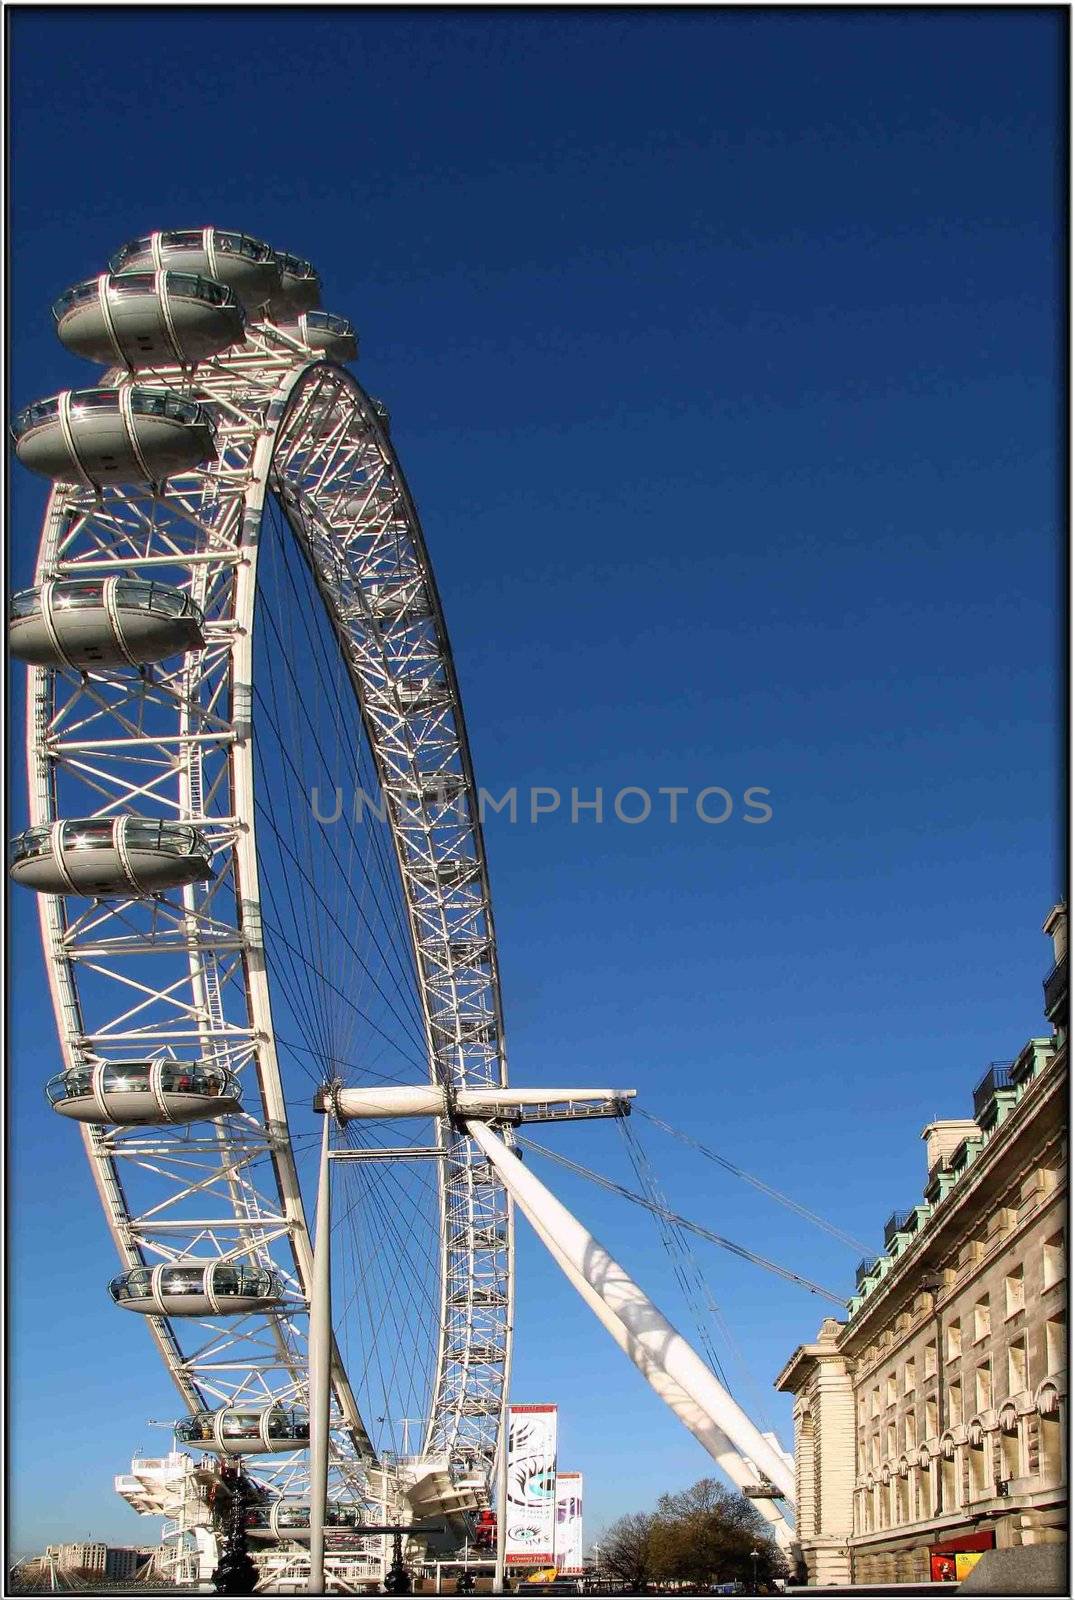 London Eye against blue sky